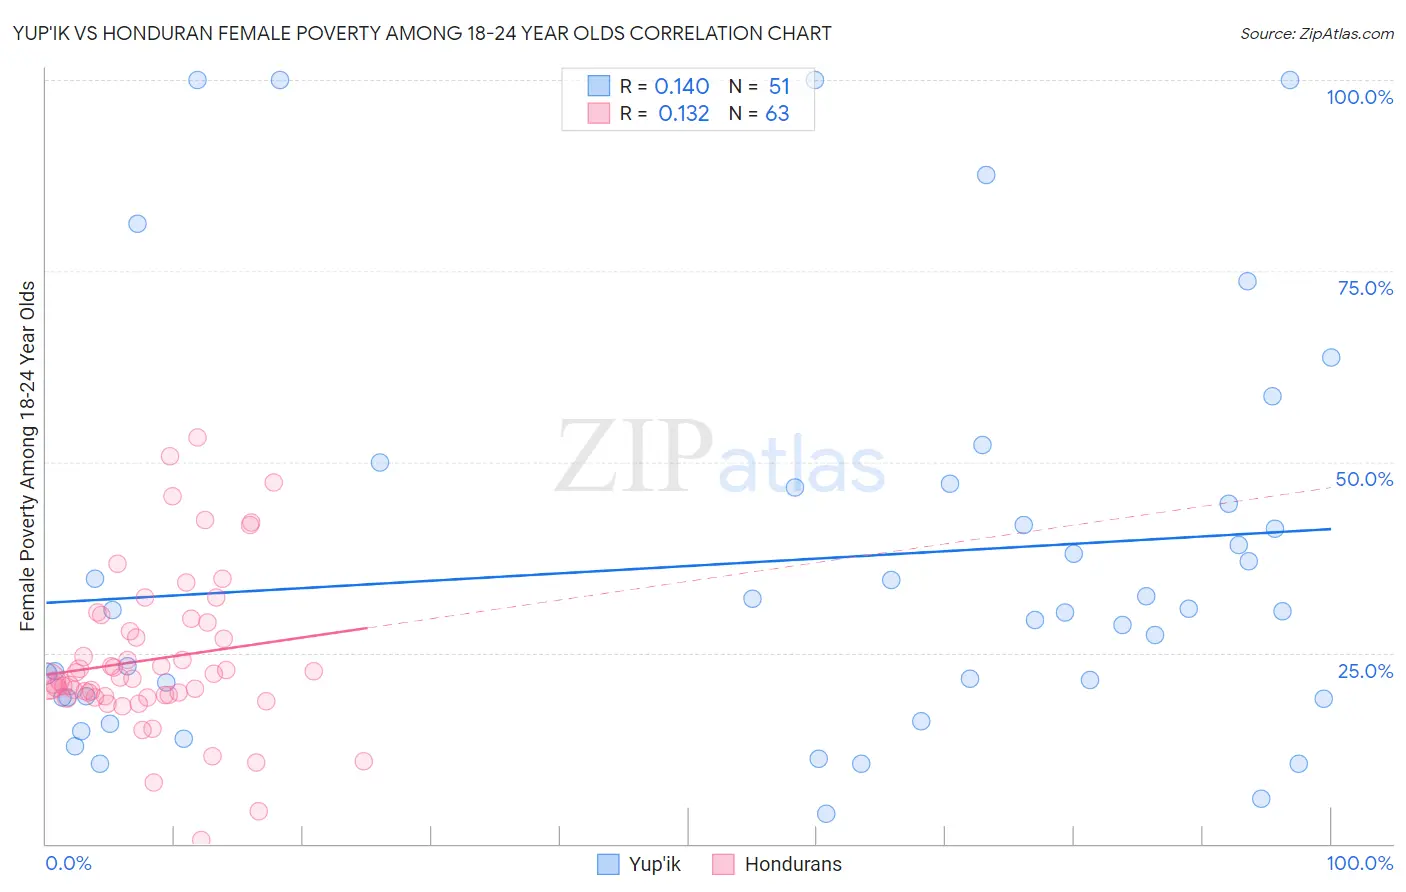 Yup'ik vs Honduran Female Poverty Among 18-24 Year Olds